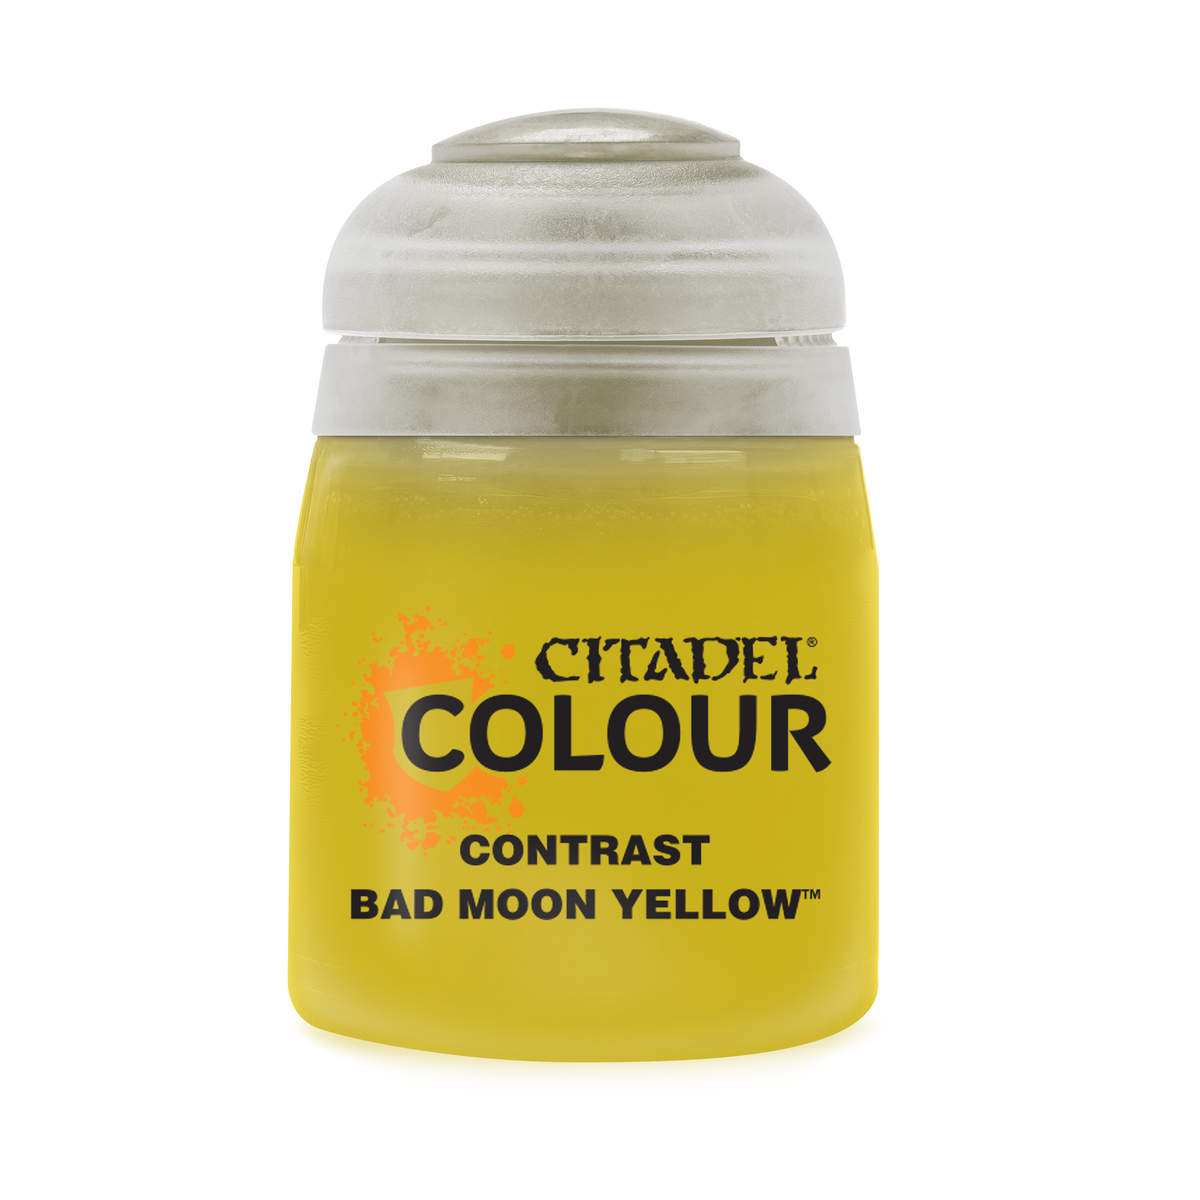 Citadel Contrast Paint: Bad Moon Yellow (18ml)